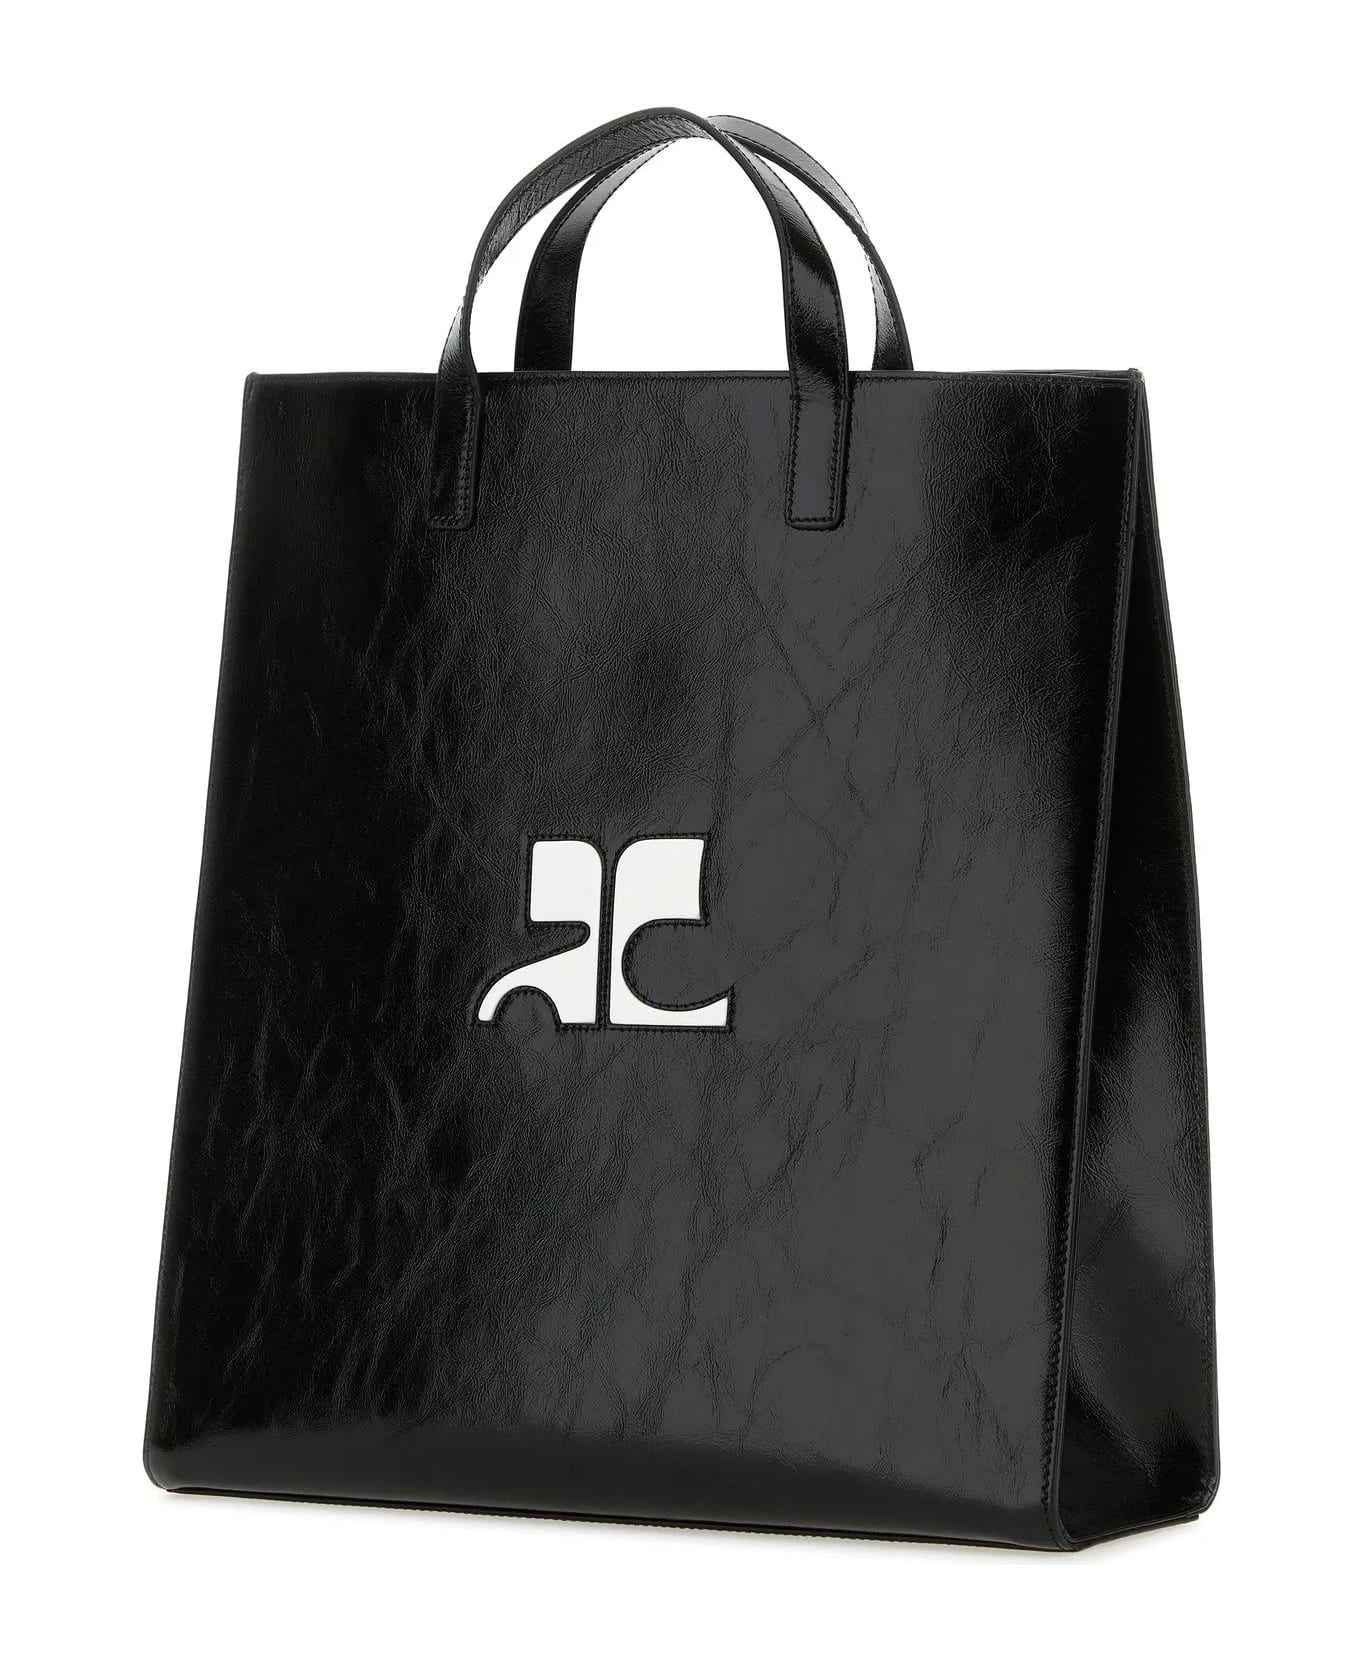 Courrèges Black Leather Heritage Shopping Bag - Black